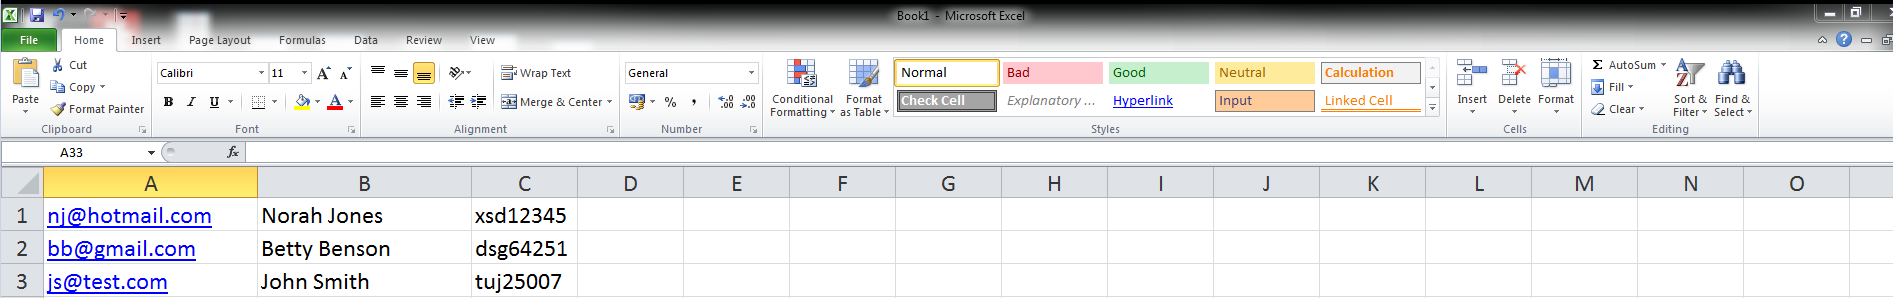 Exemple de feuille de calcul Microsoft Excel